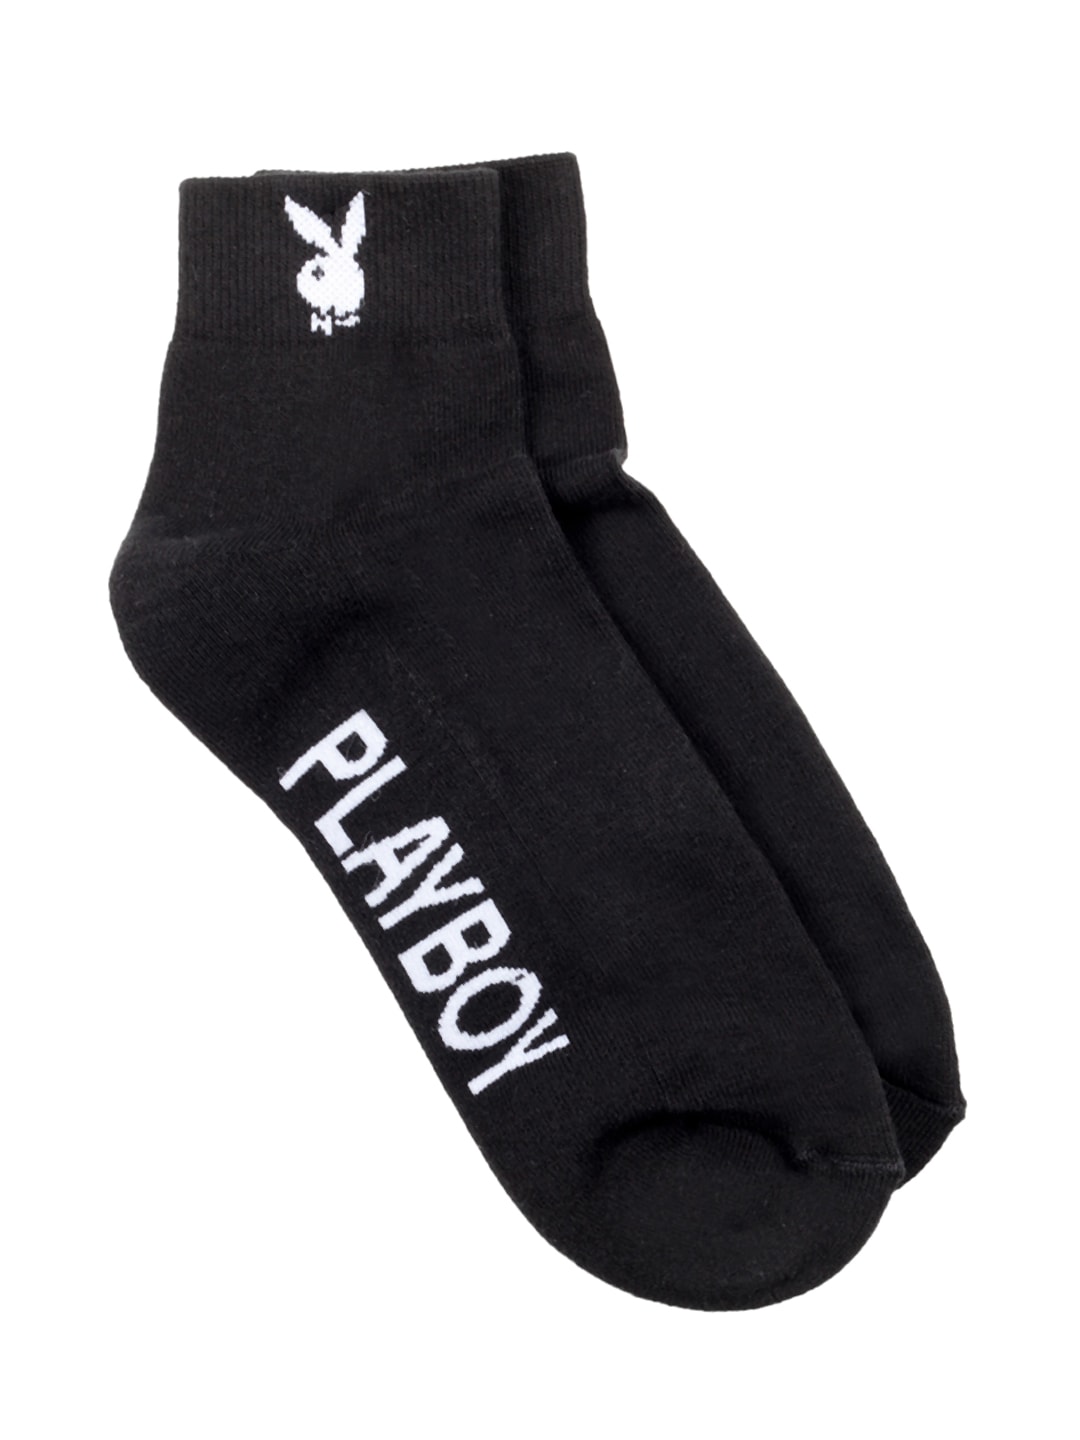 Playboy Men Black Socks